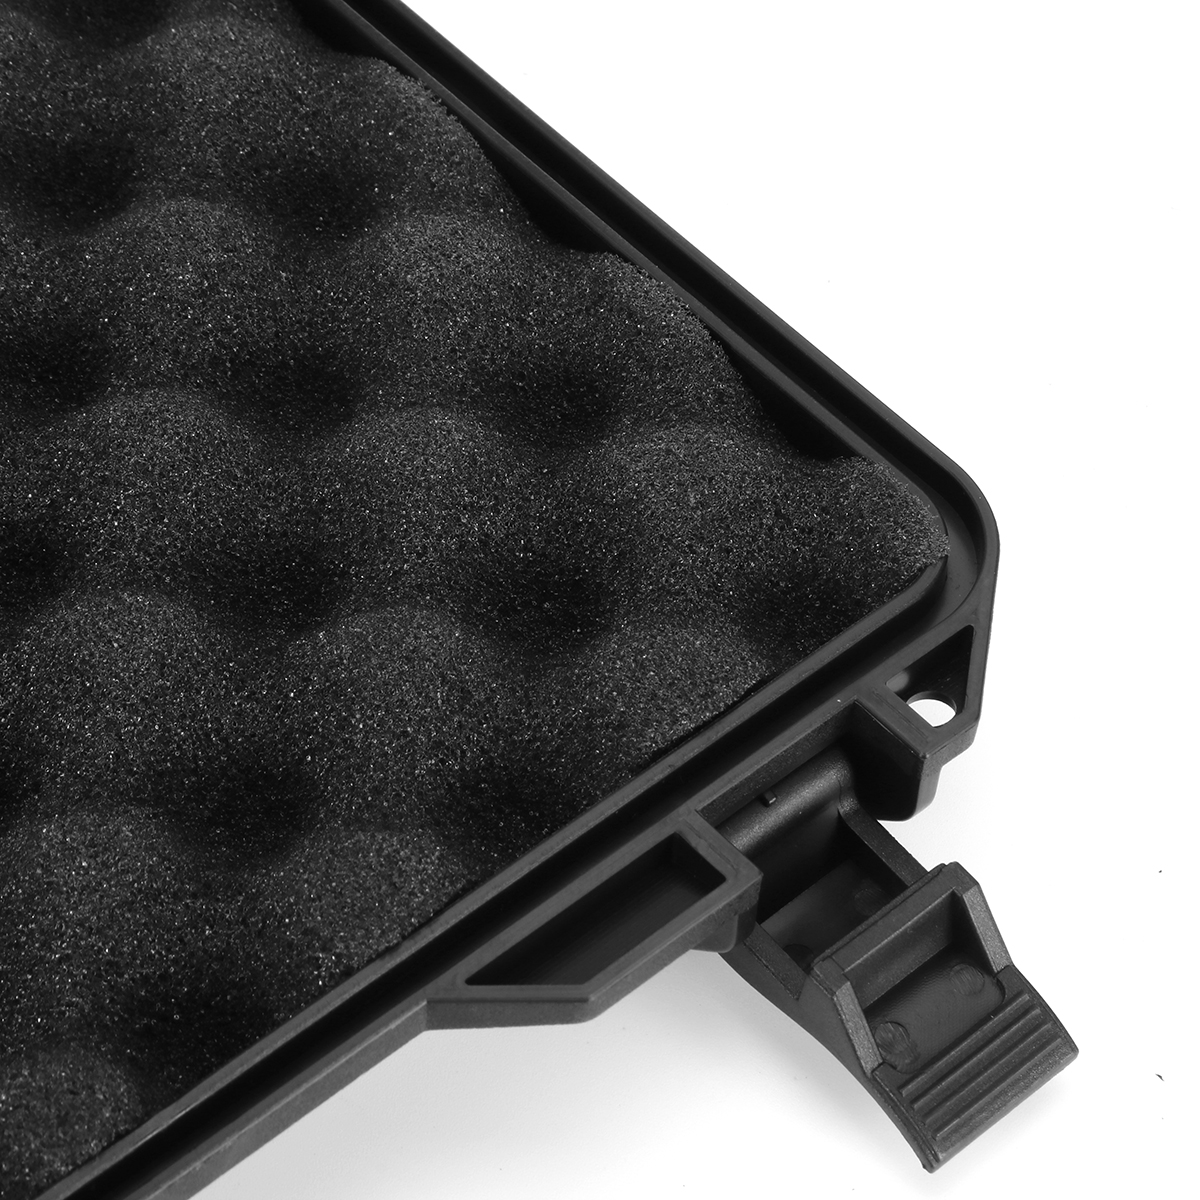 Waterproof-Hard-Carry-Case-Tool-Kits-Impact-Resistant-Shockproof-Storage-Box-New-1658756-10